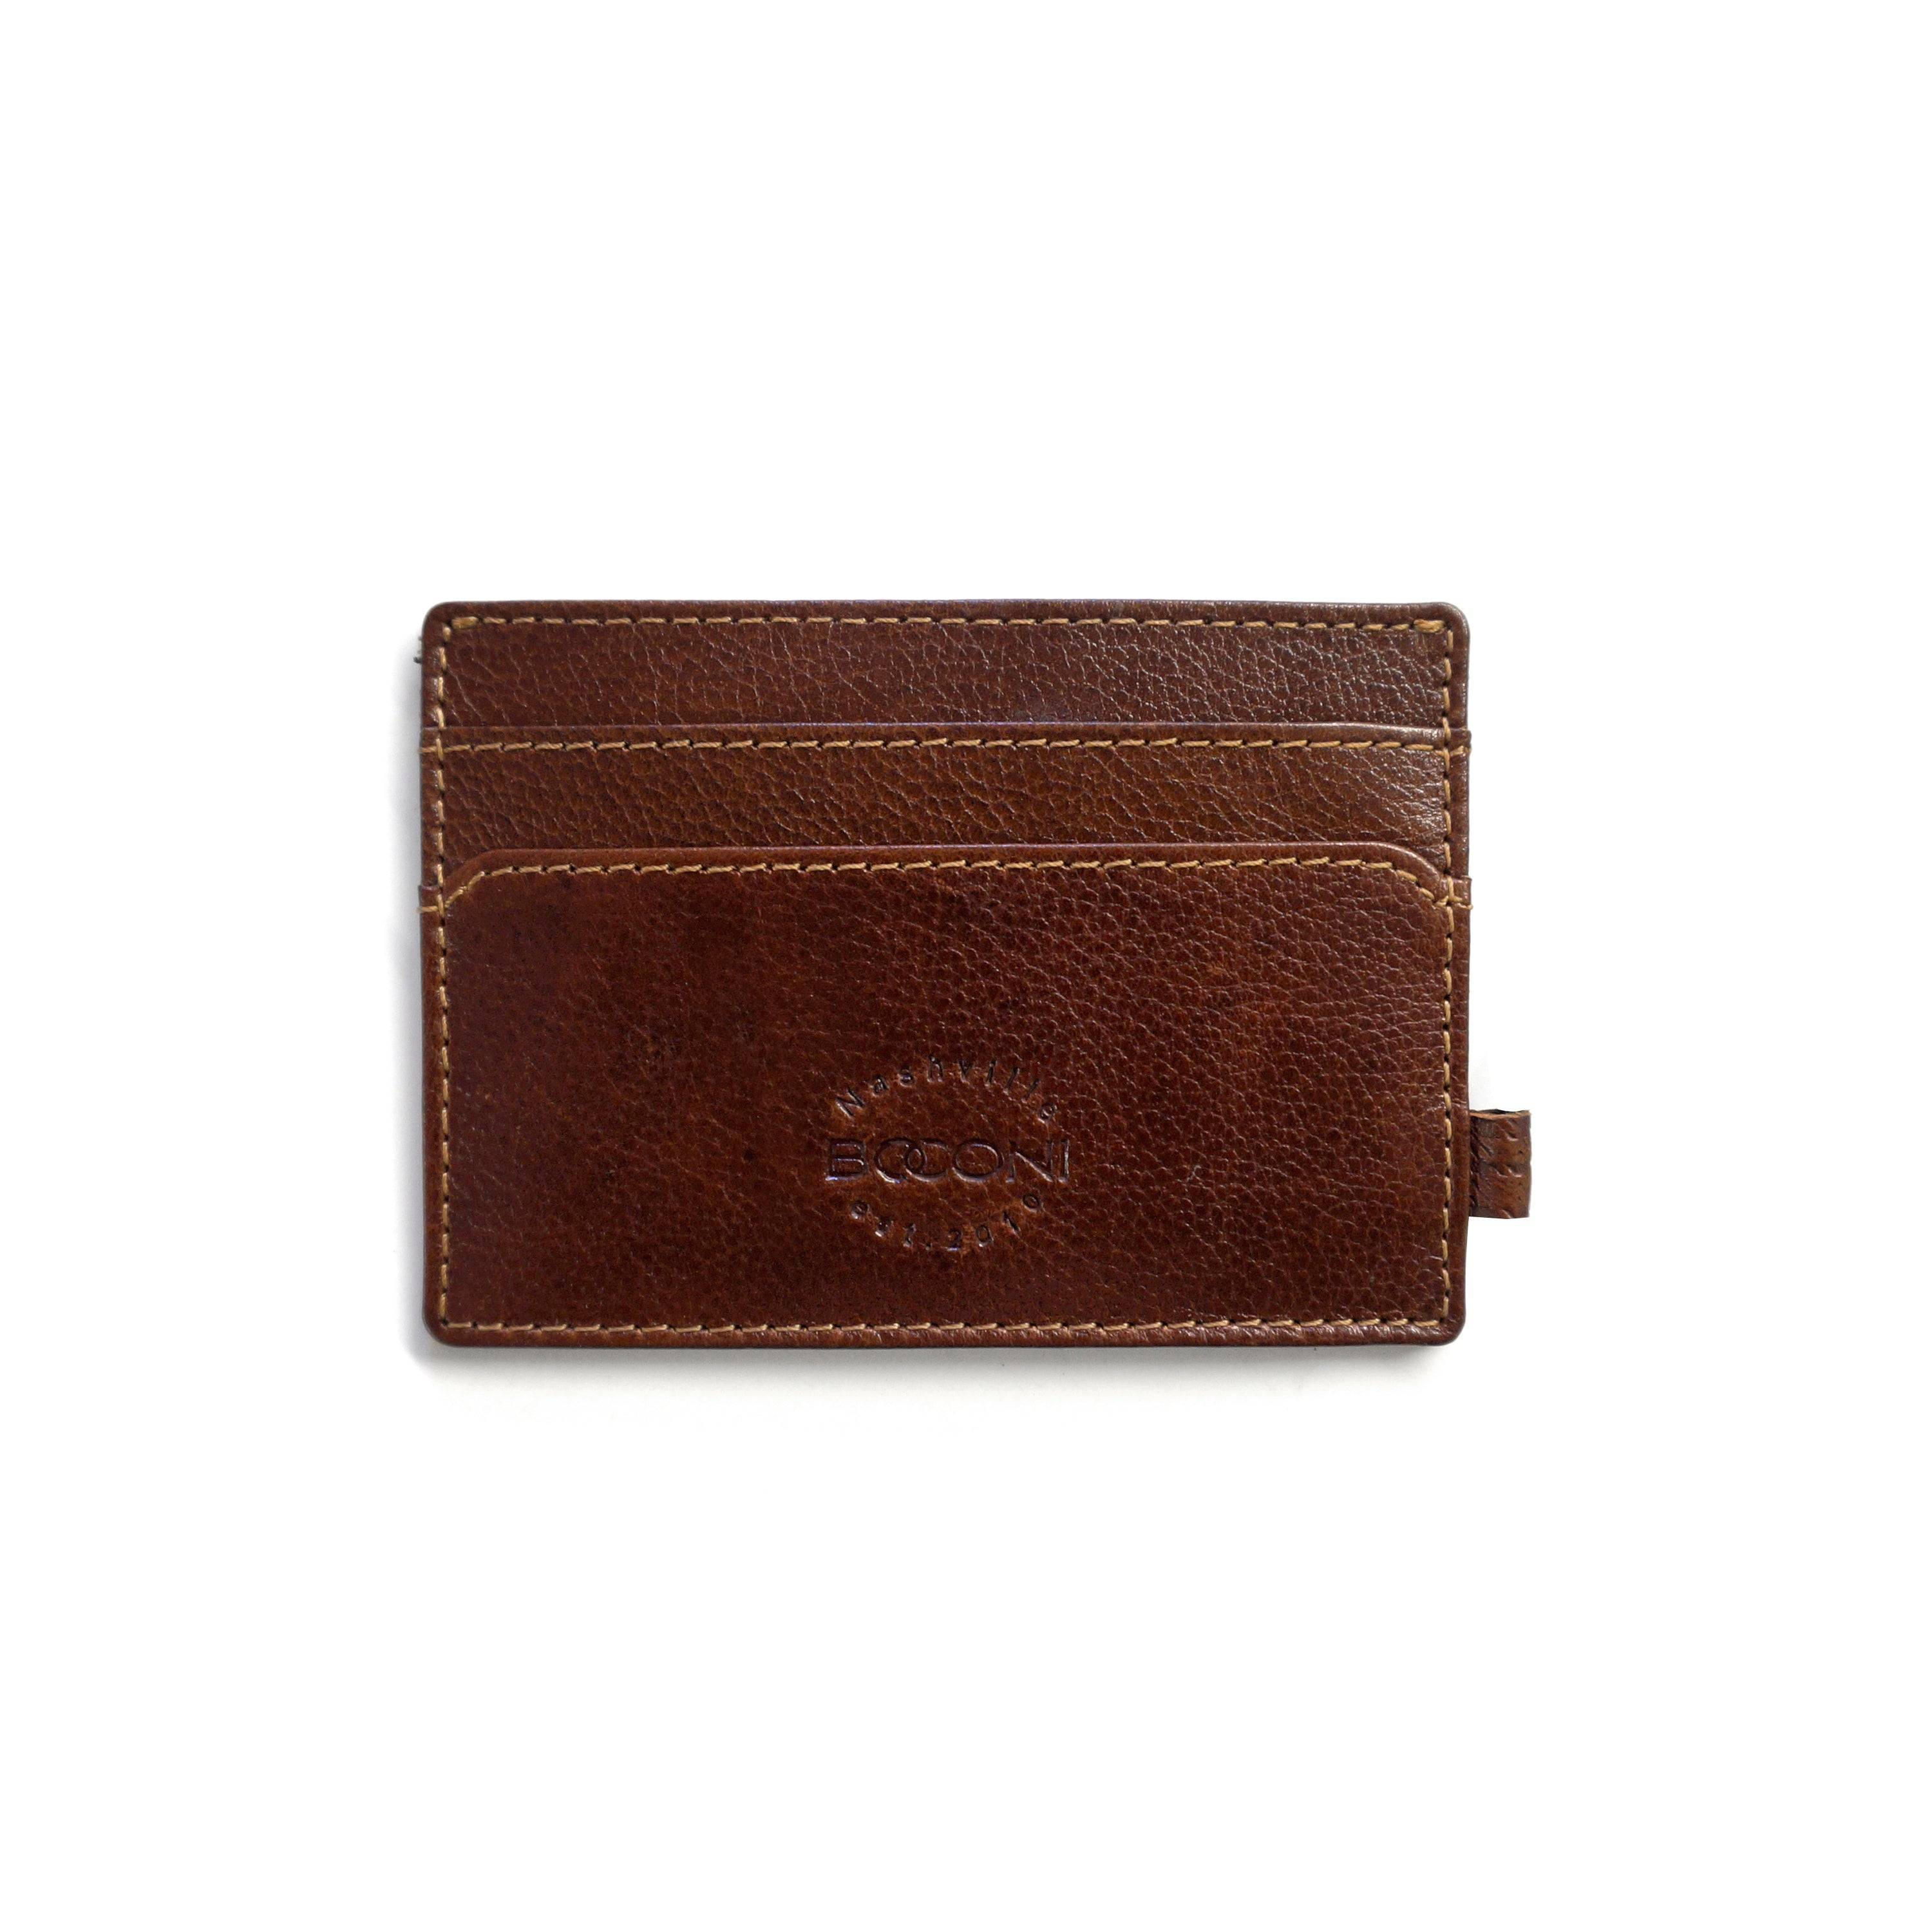 Shop Leather Goods For Men - Bags, Belts & Wallets | BOCONI – Boconi ...